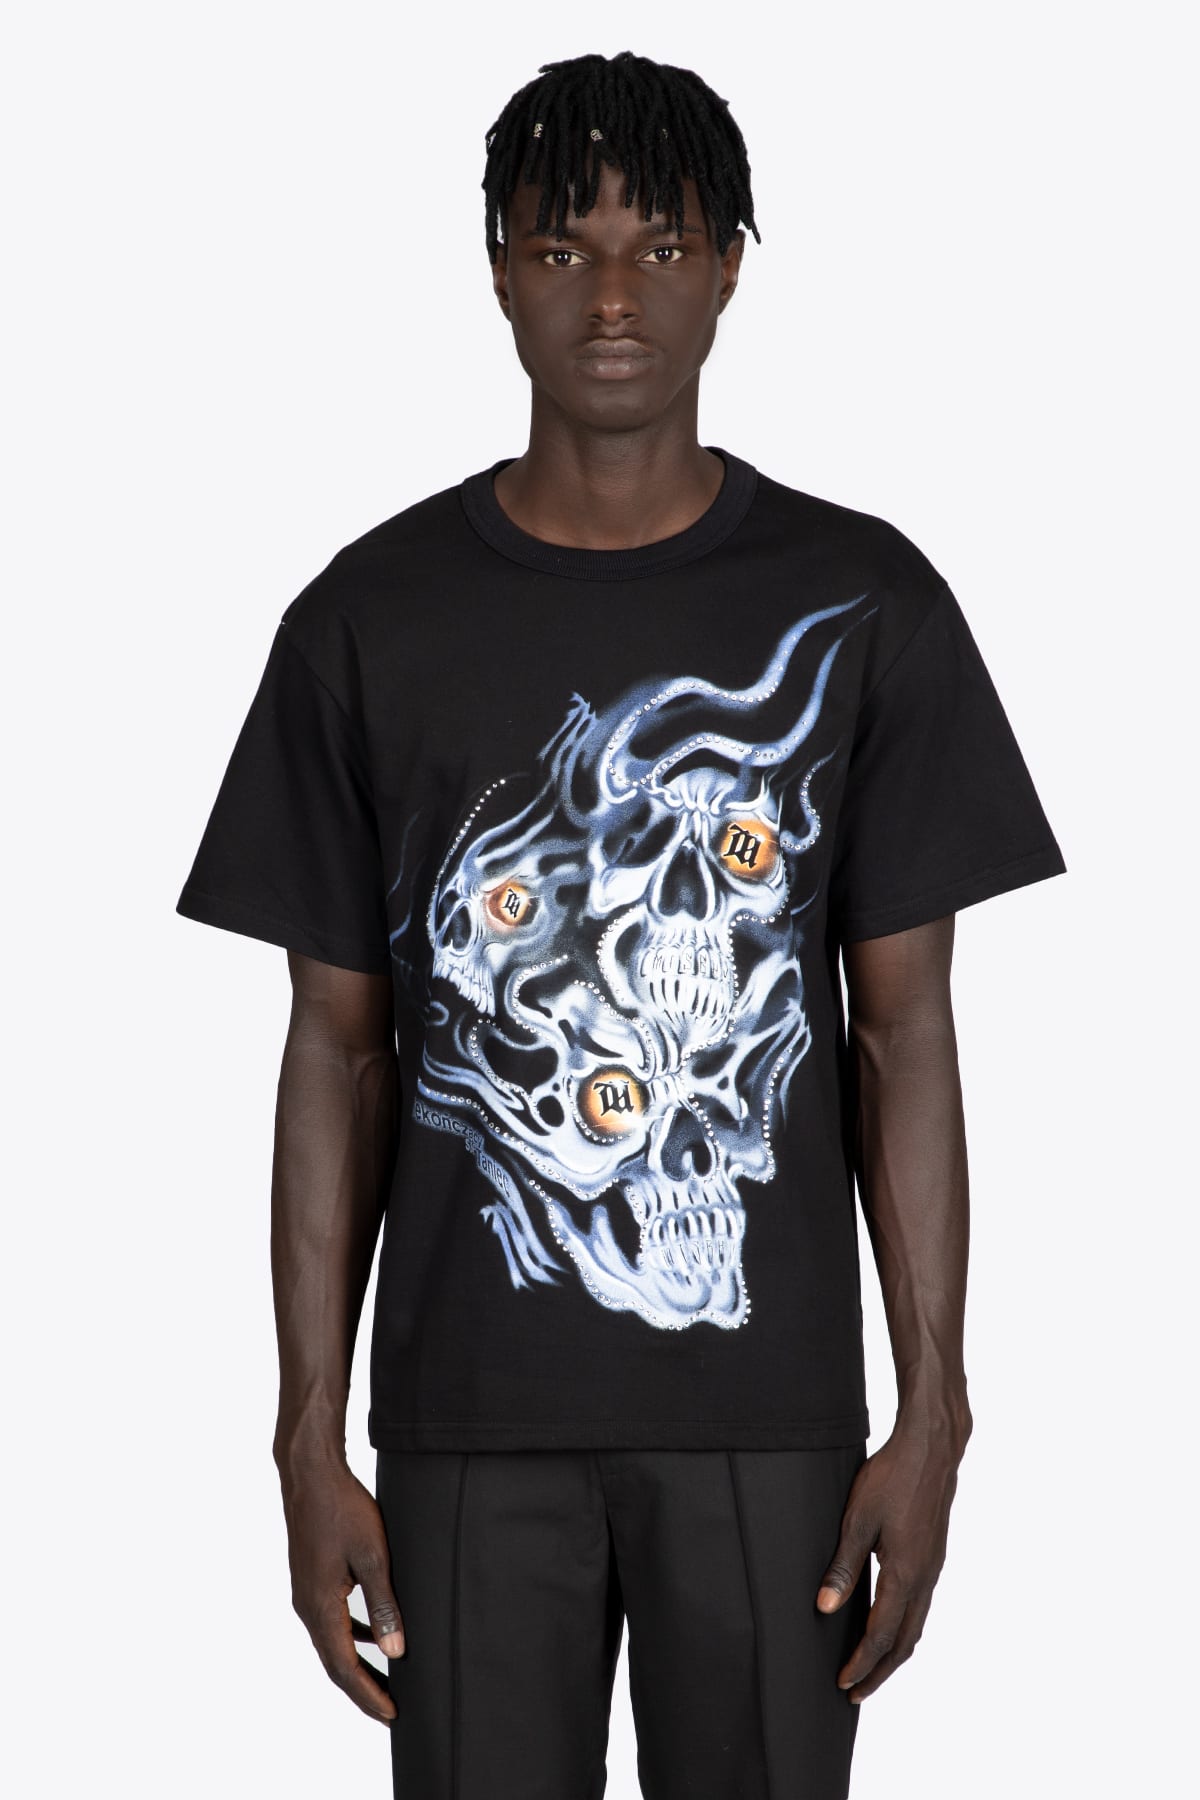 MISBHV Drums Of Death T-shirt Black cotton t-shirt with skulls print